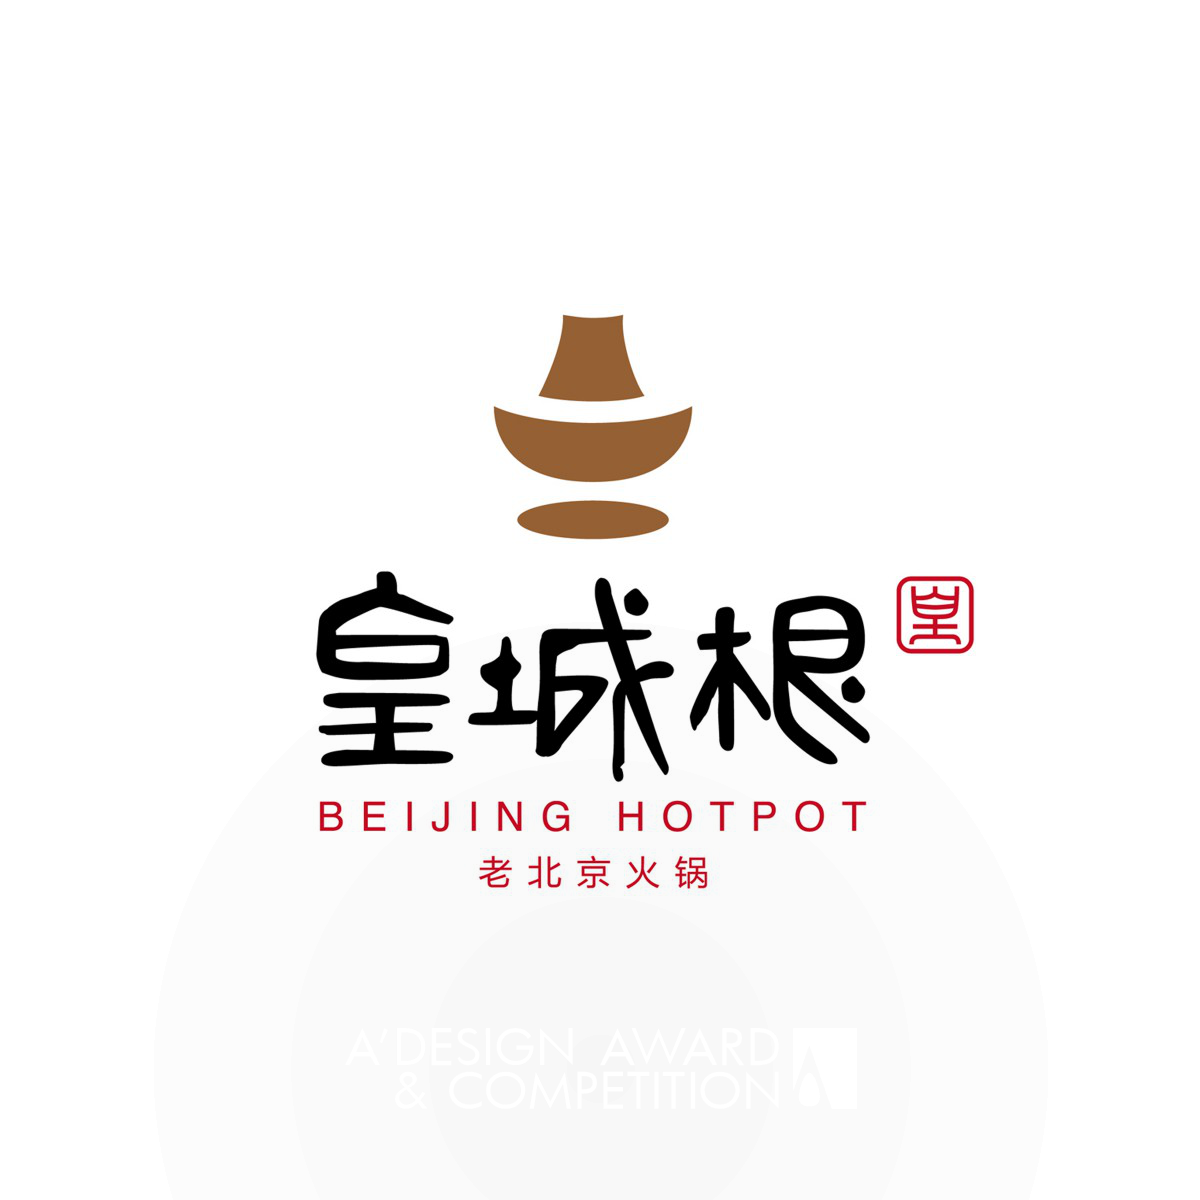 Beijing Hotpot Logo  by Dongdao Team Iron Graphics, Illustration and Visual Communication Design Award Winner 2016 